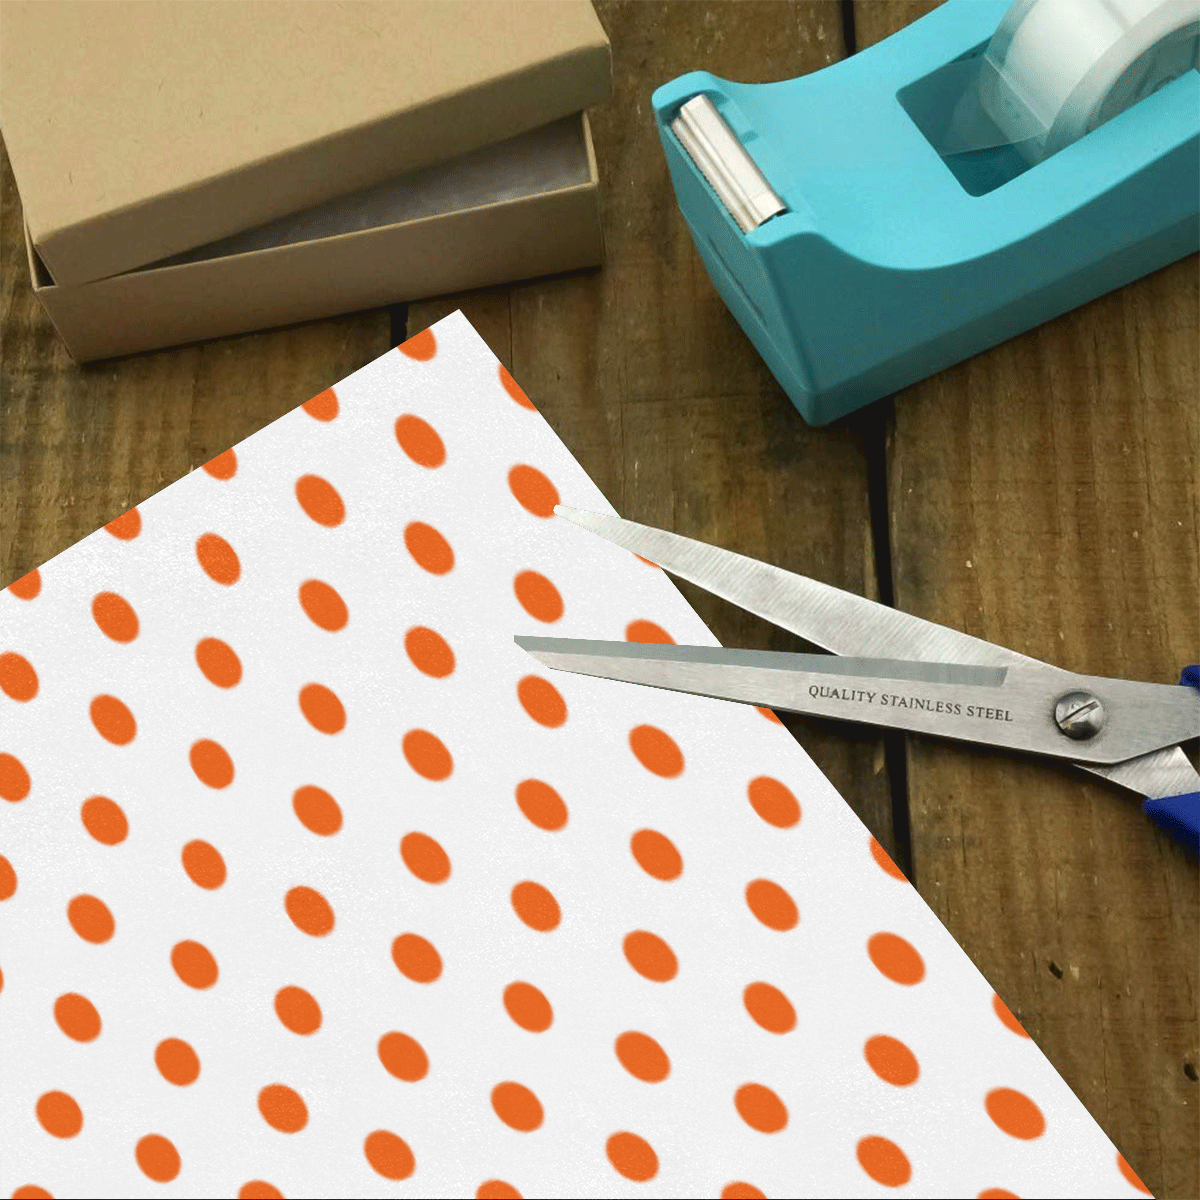 Tangerine Orange Polka Dots on White Gift Wrapping Paper 58"x 23" (3 Rolls)